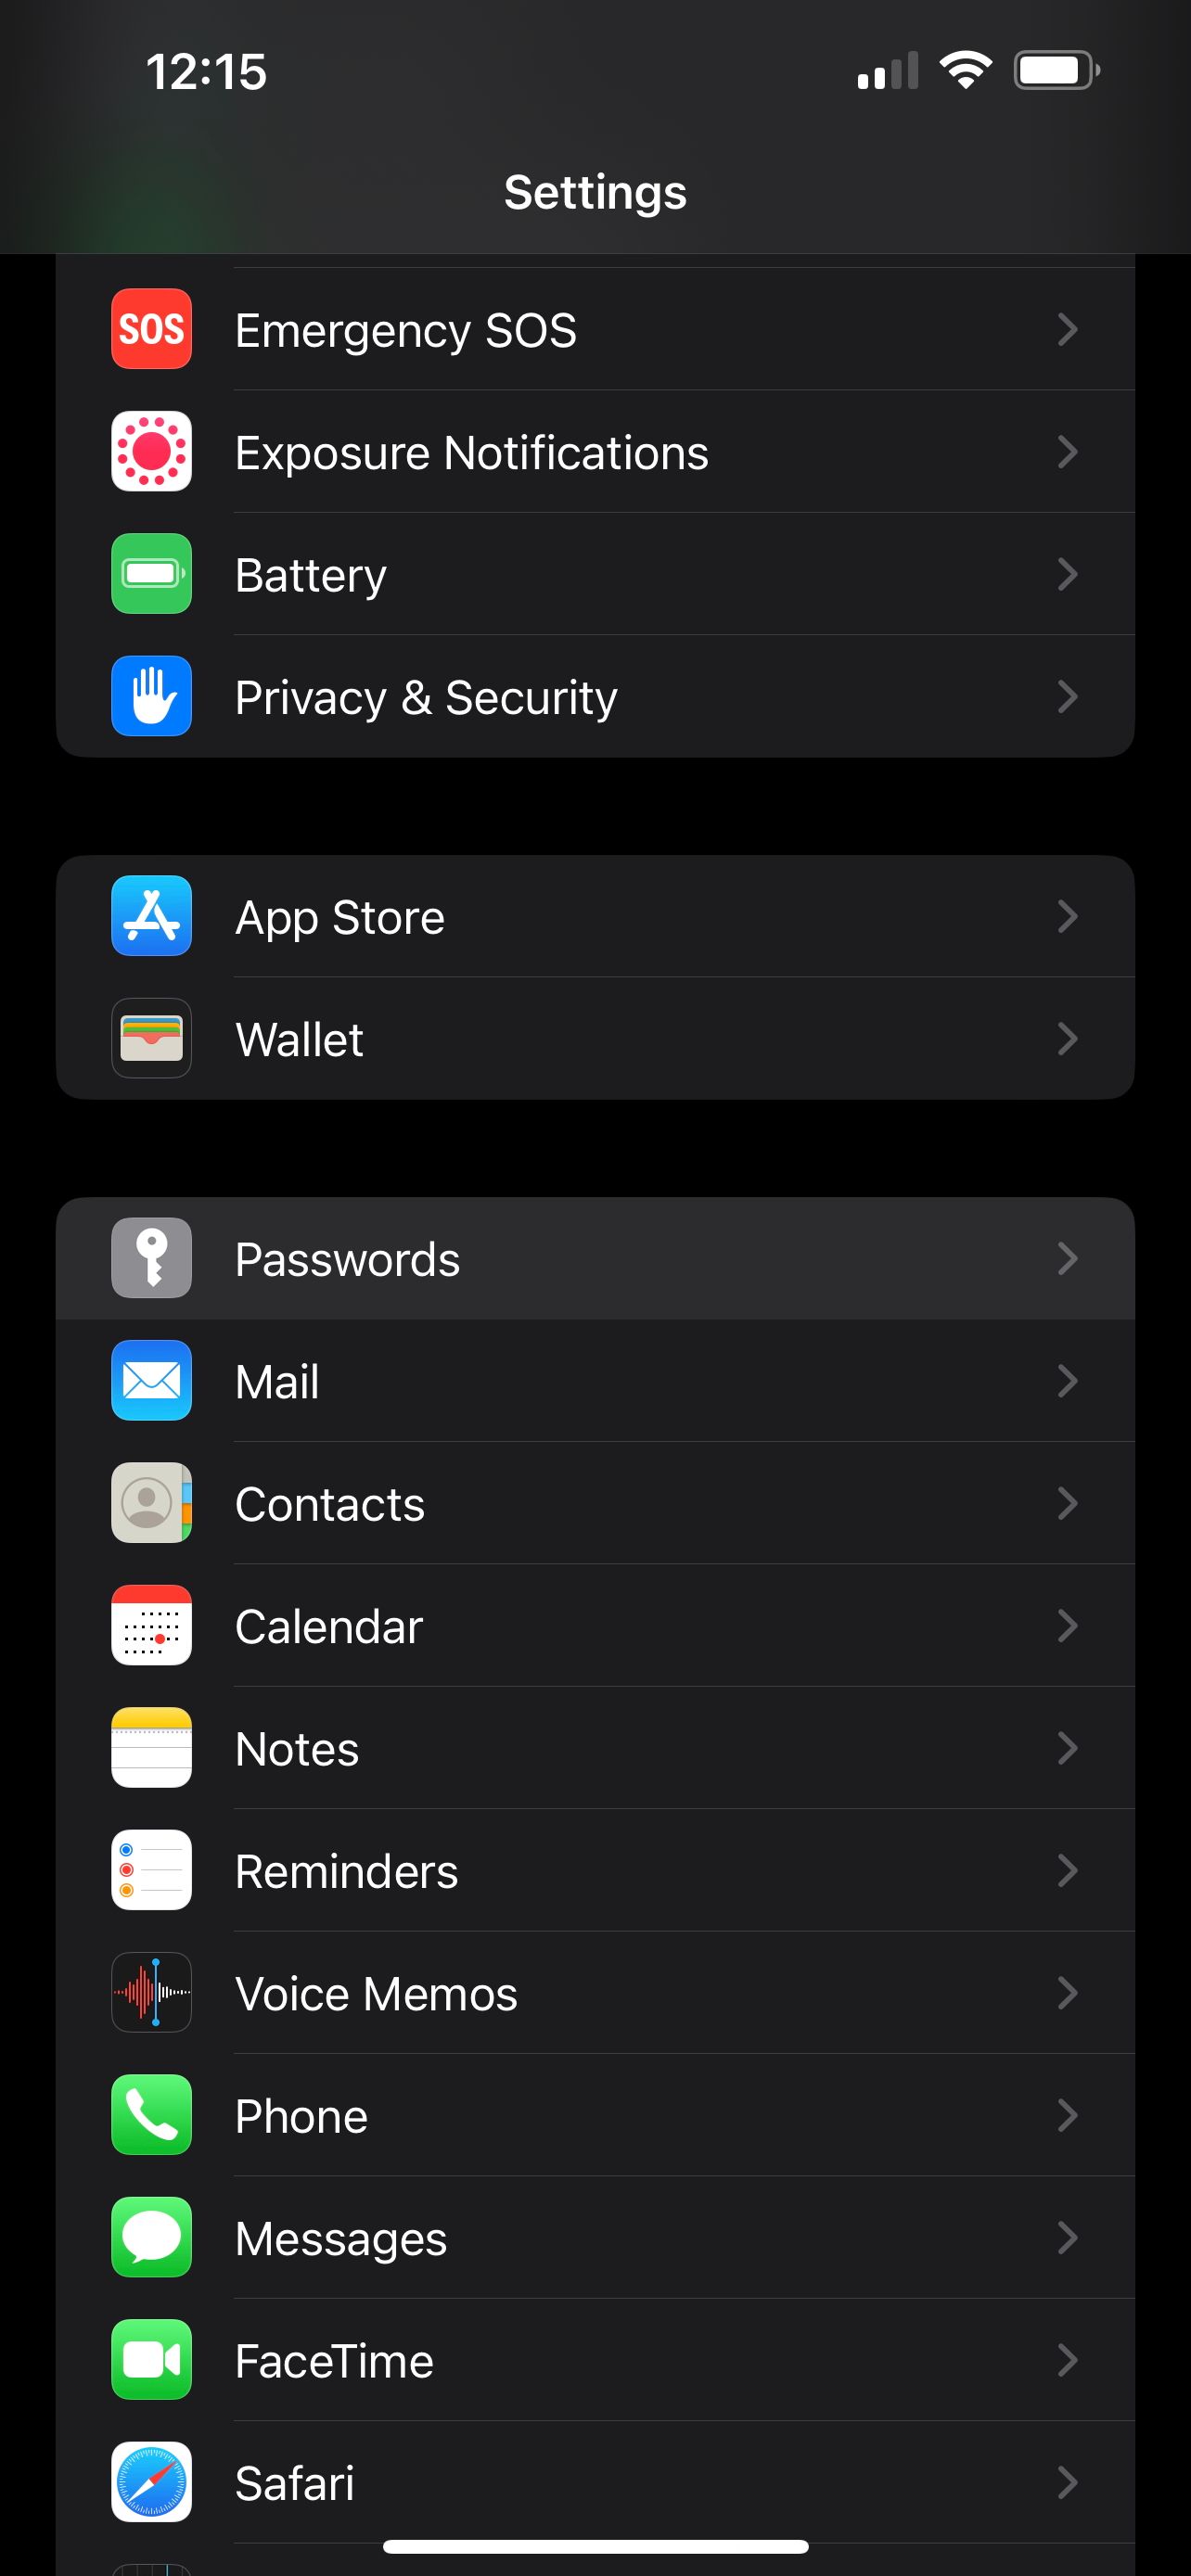 Passwords in iOS settings